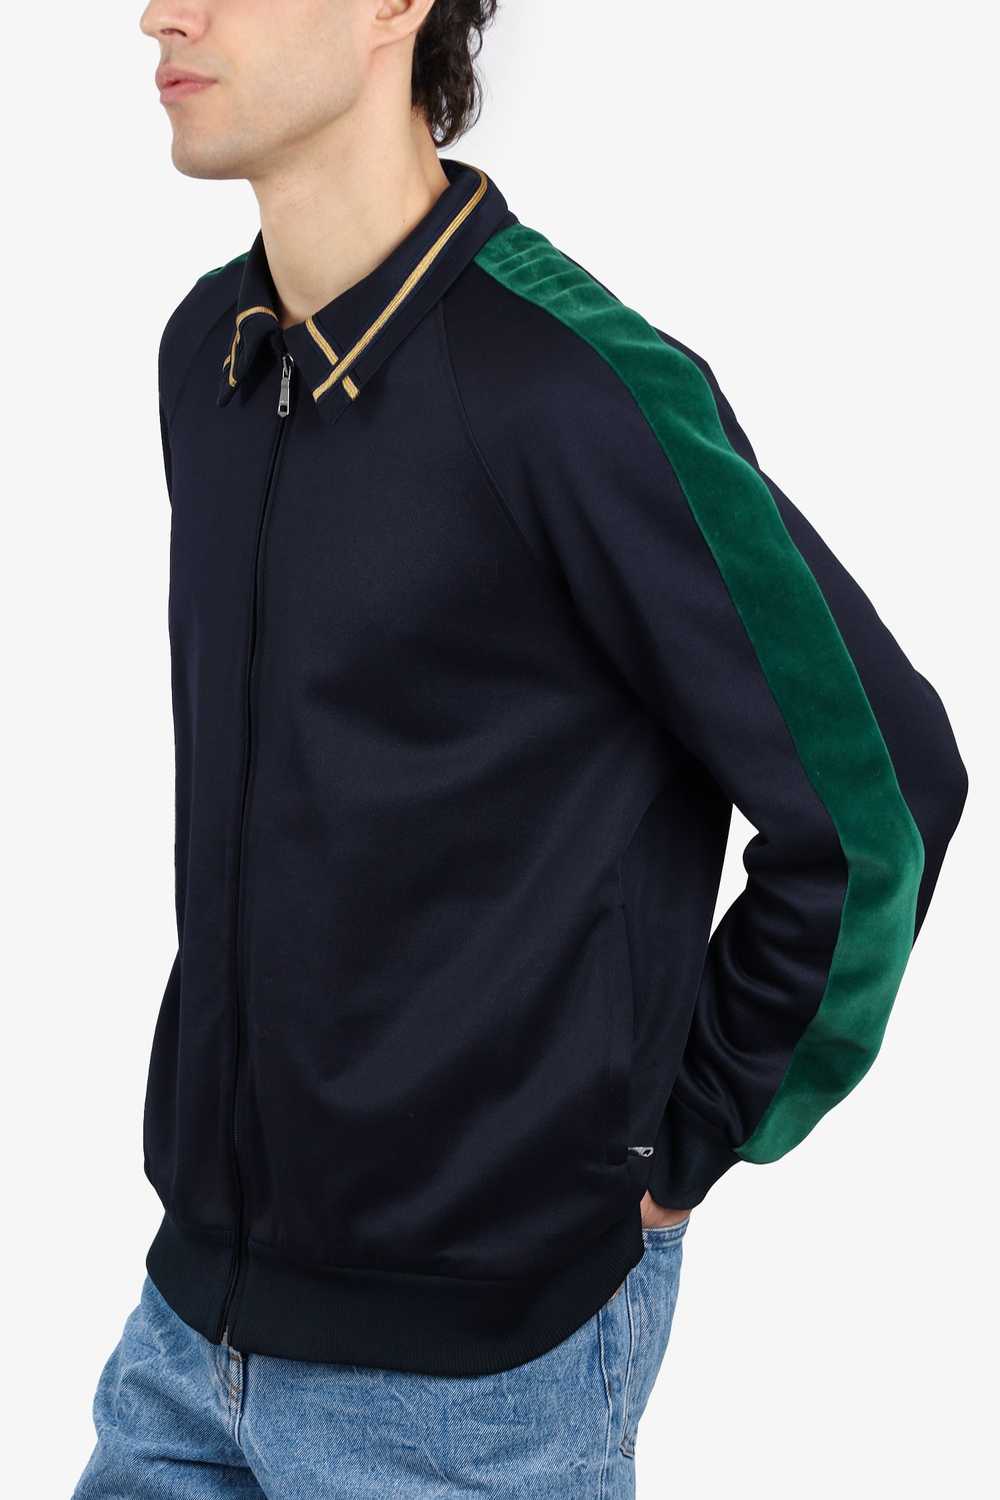 Gucci Black Jersey/Green Velvet Zip-Up Jacket Wit… - image 3